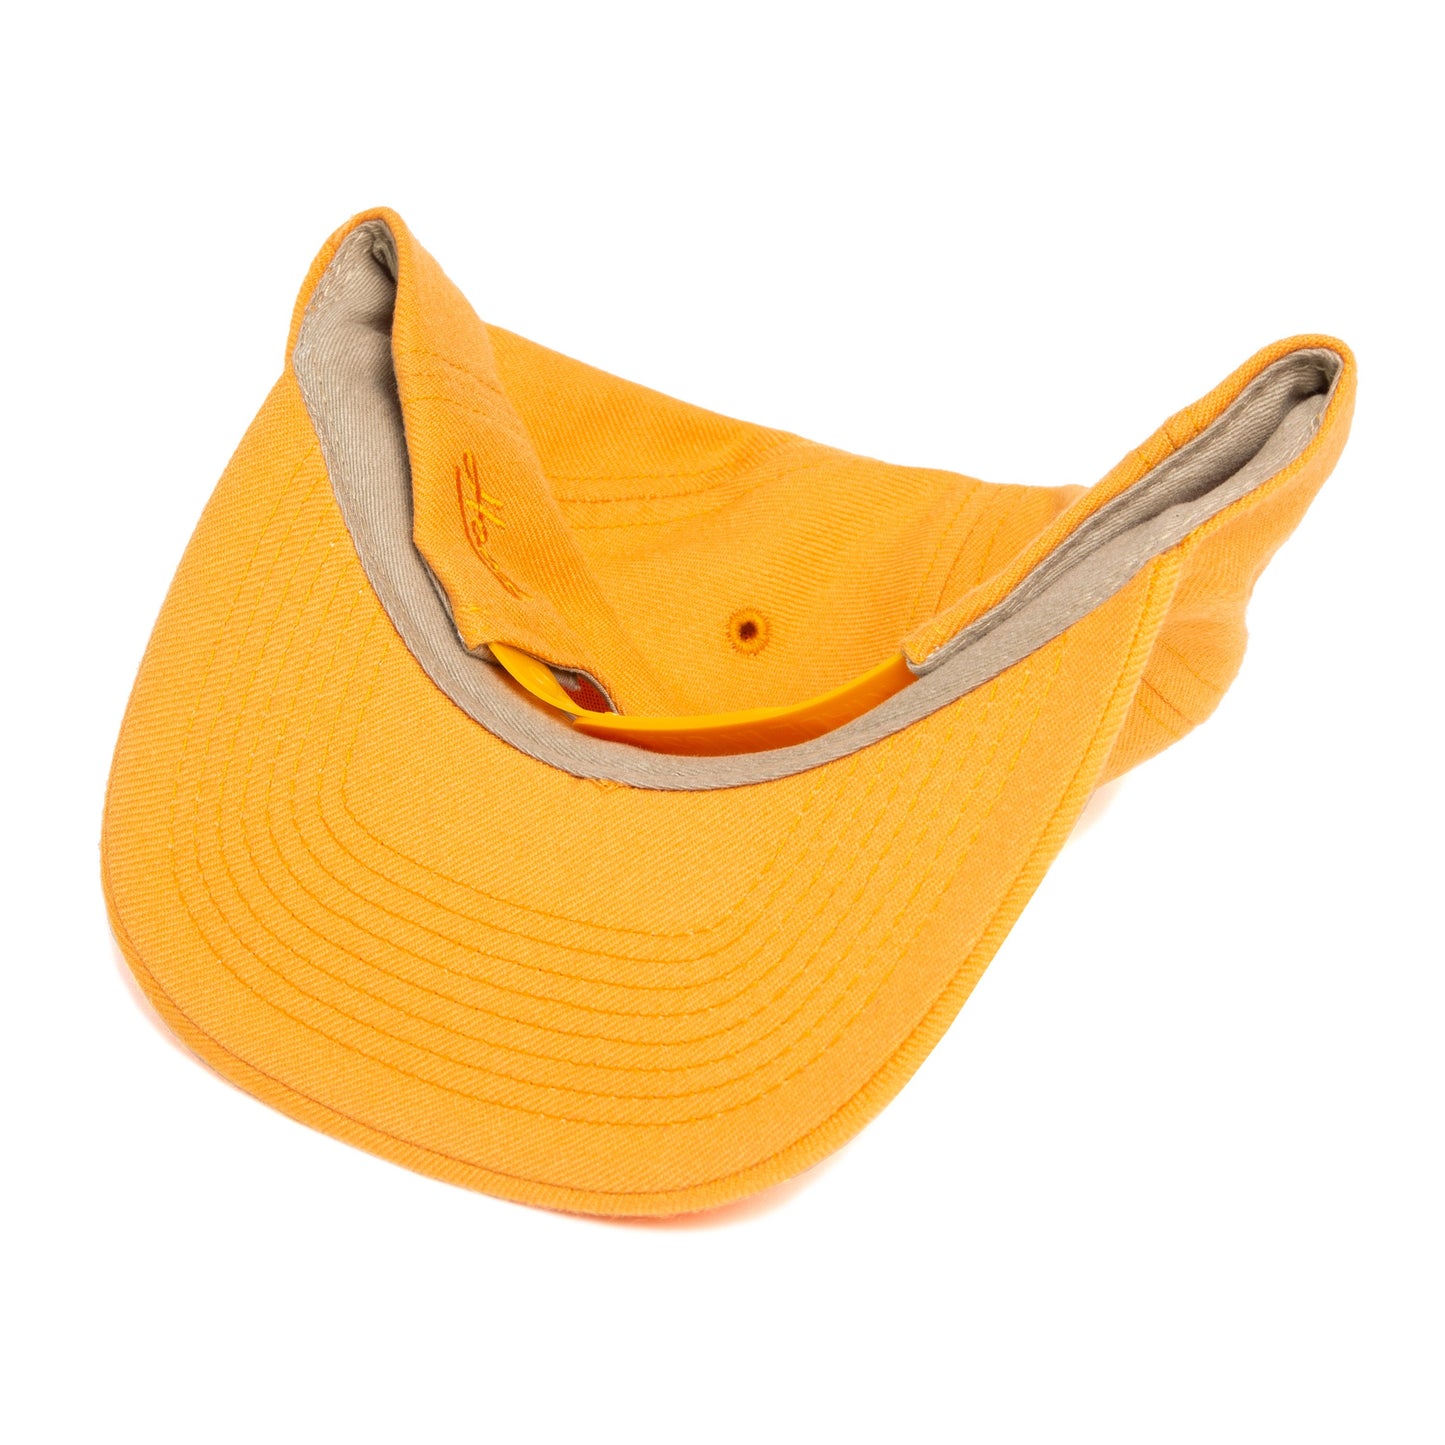 Malibu II Snapback Hat